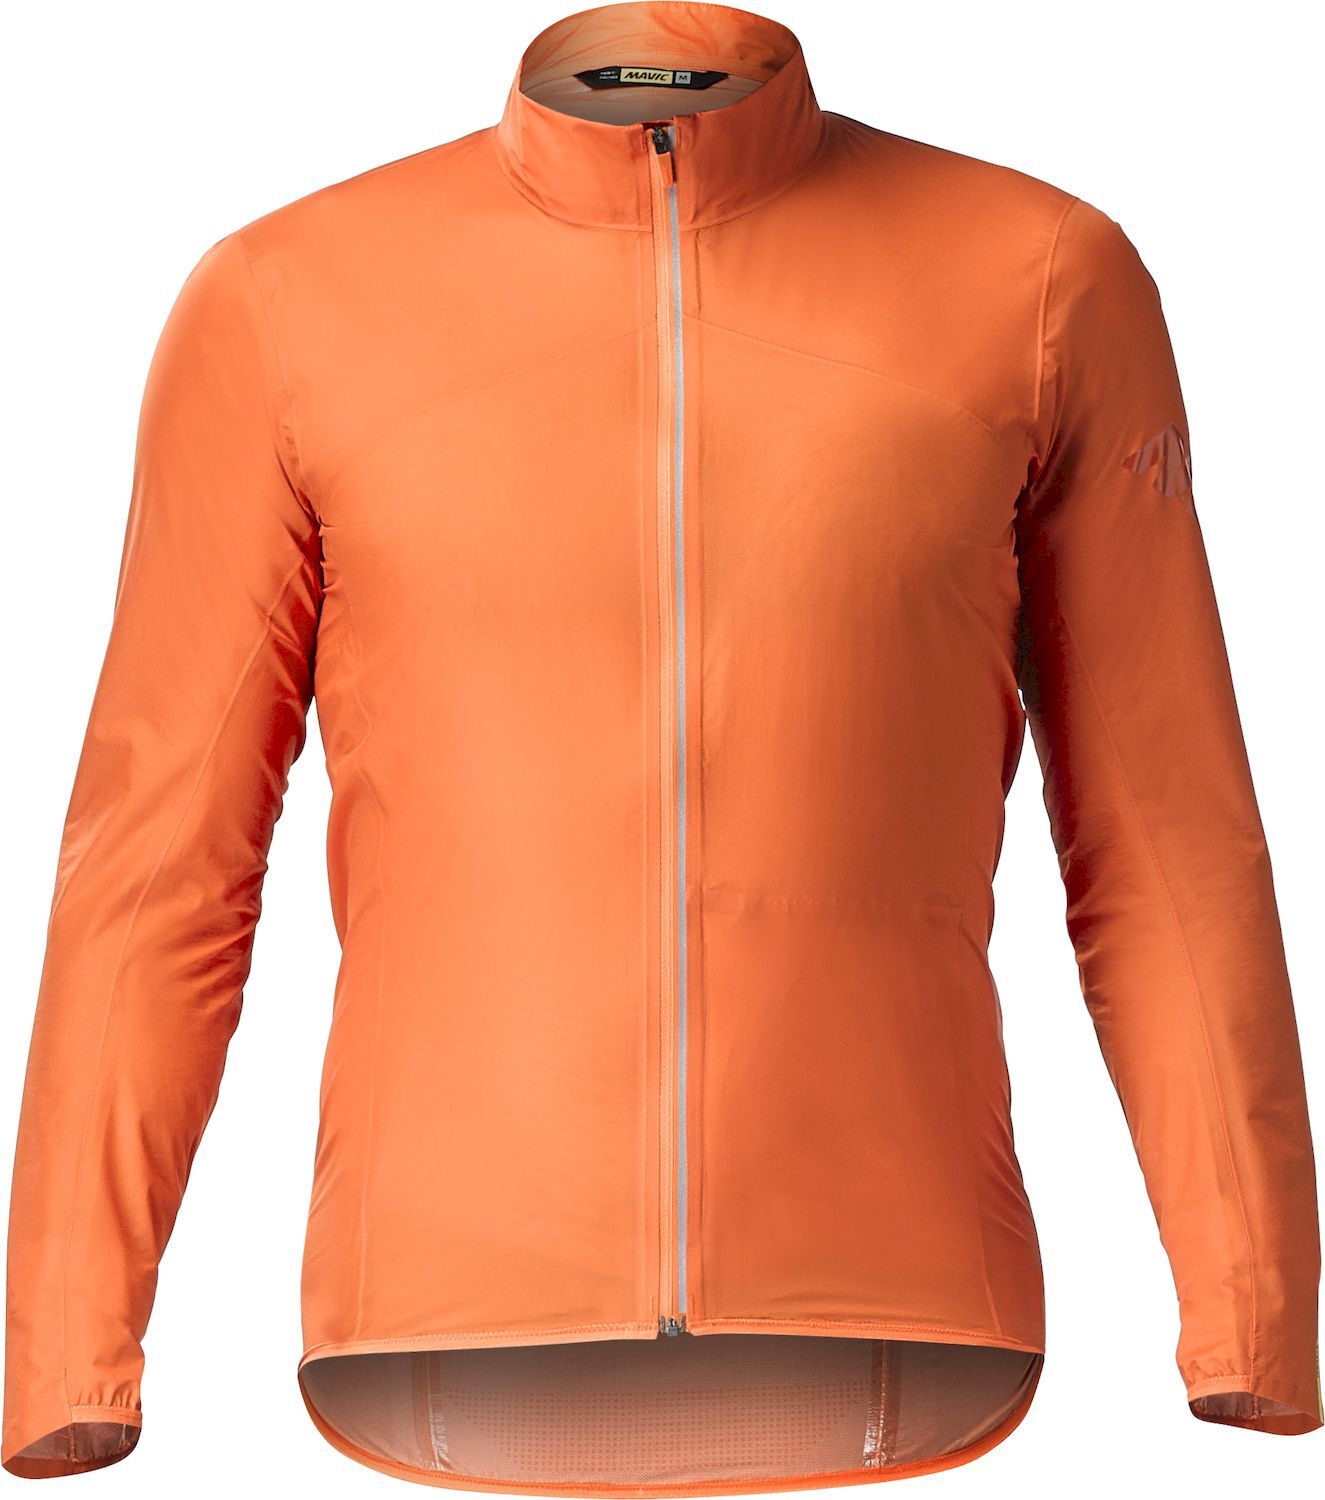 Mavic Cosmic H2O - Cycling jacket - Men's